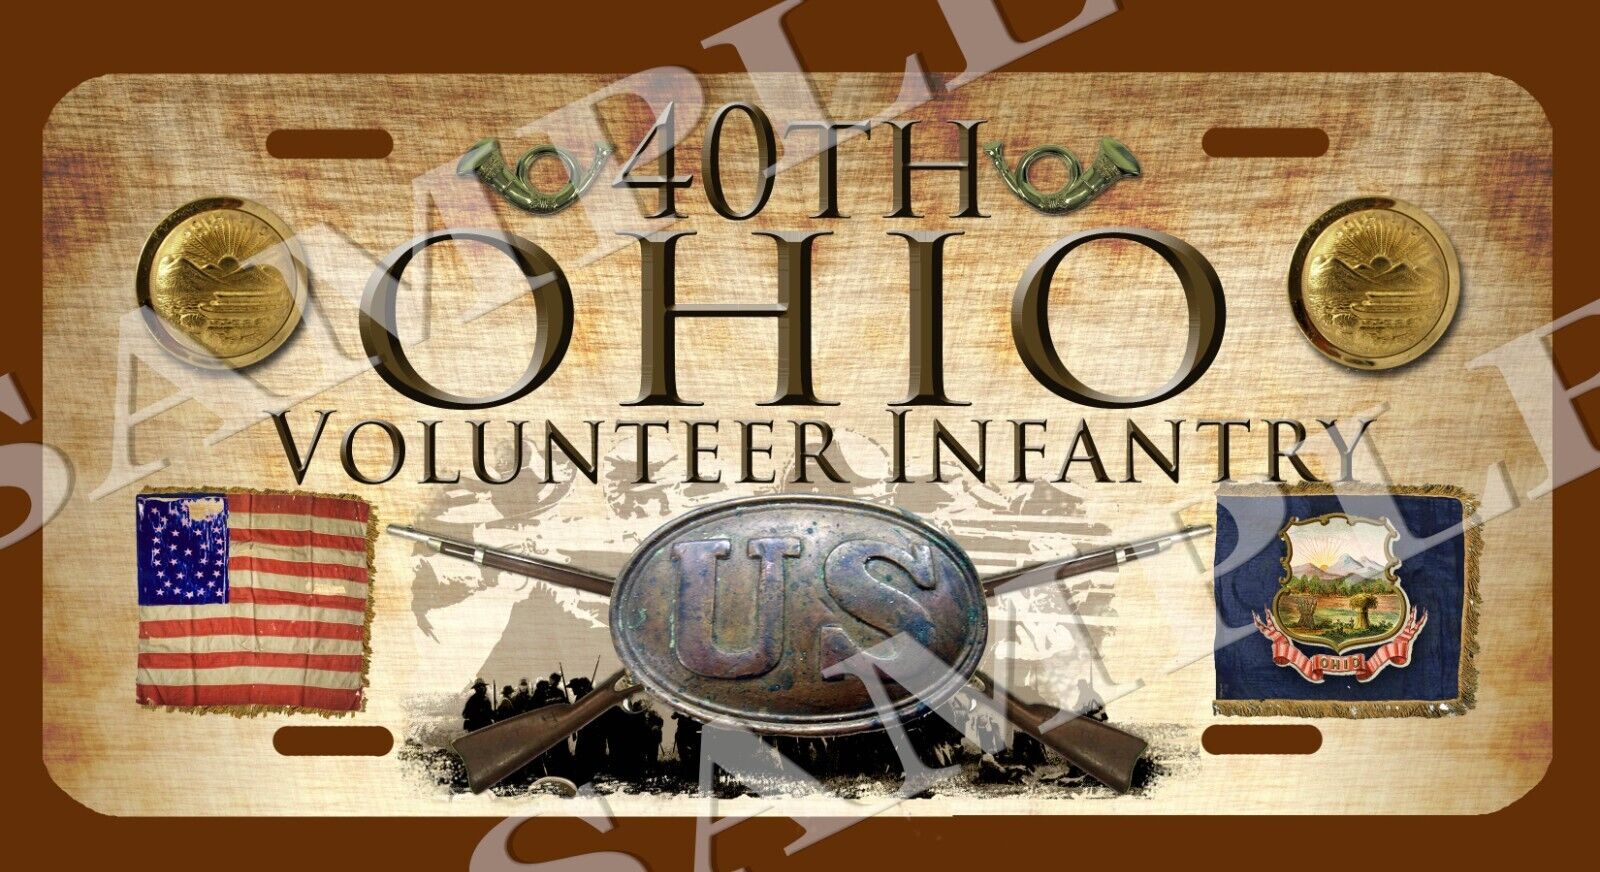 40th Ohio Volunteer Infantry American Civil War Themed vehicle license plate